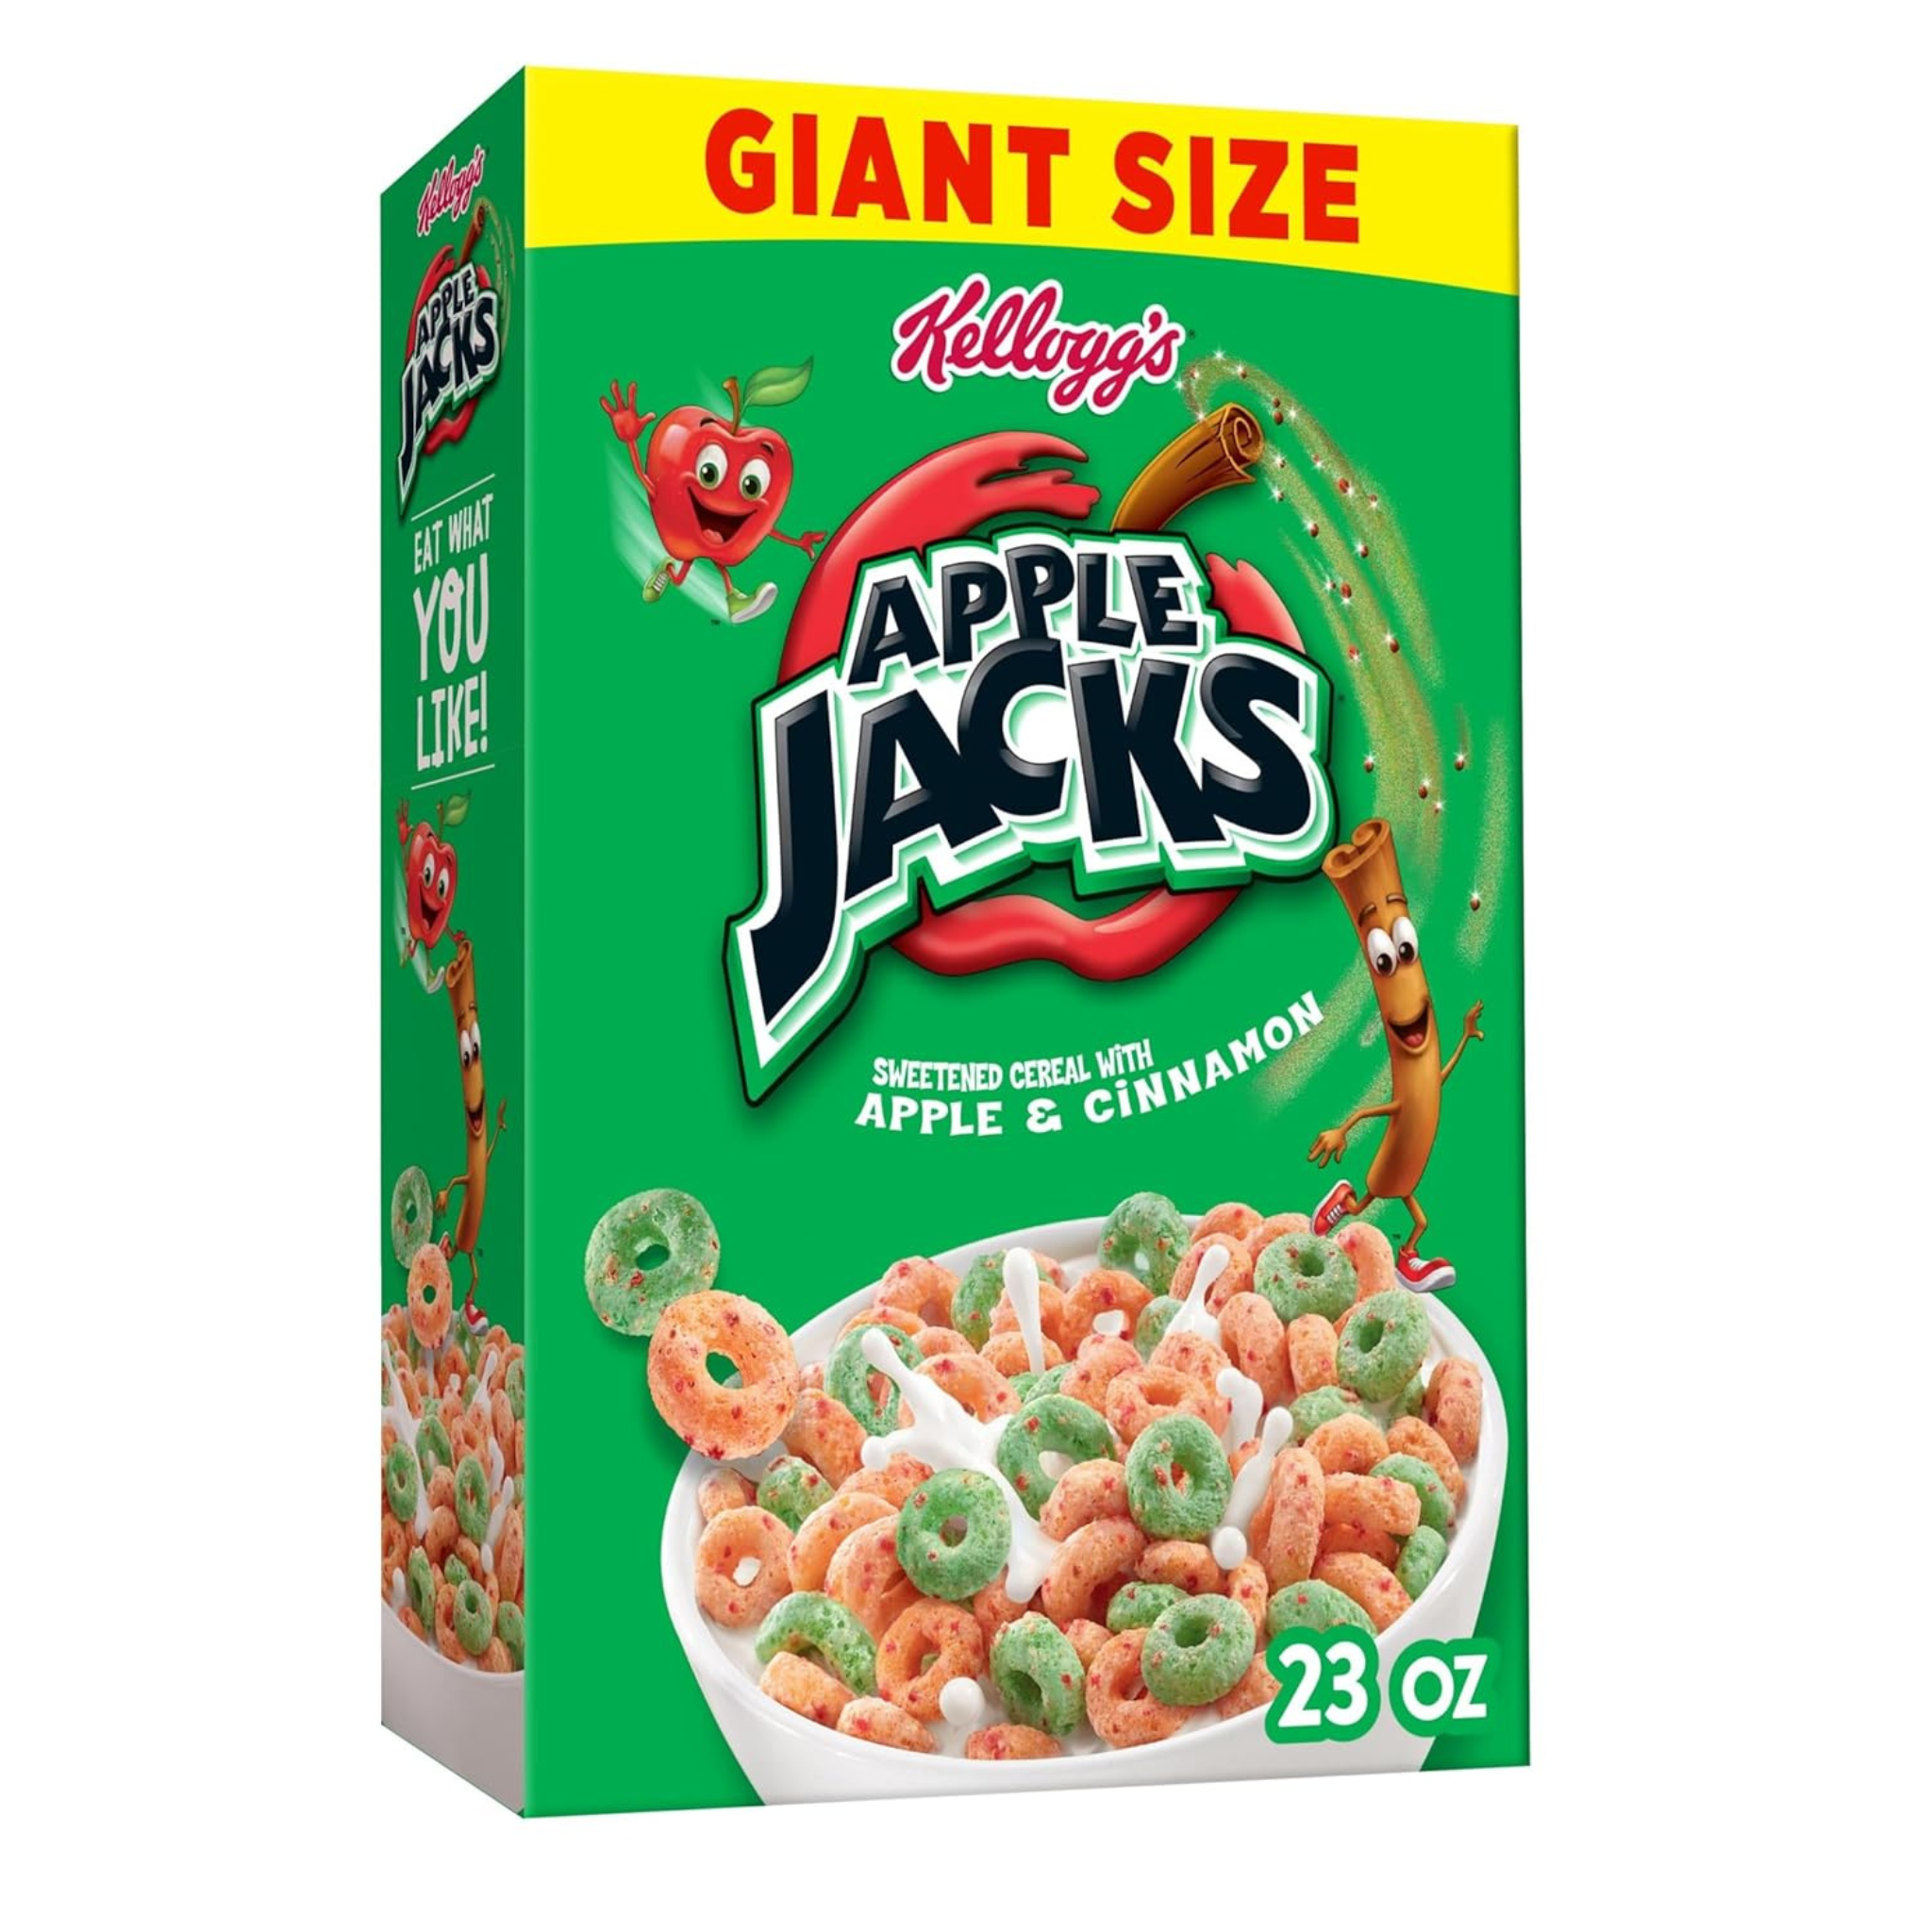 Giant Size Box of Kellogg’s Apple Jacks Cereal